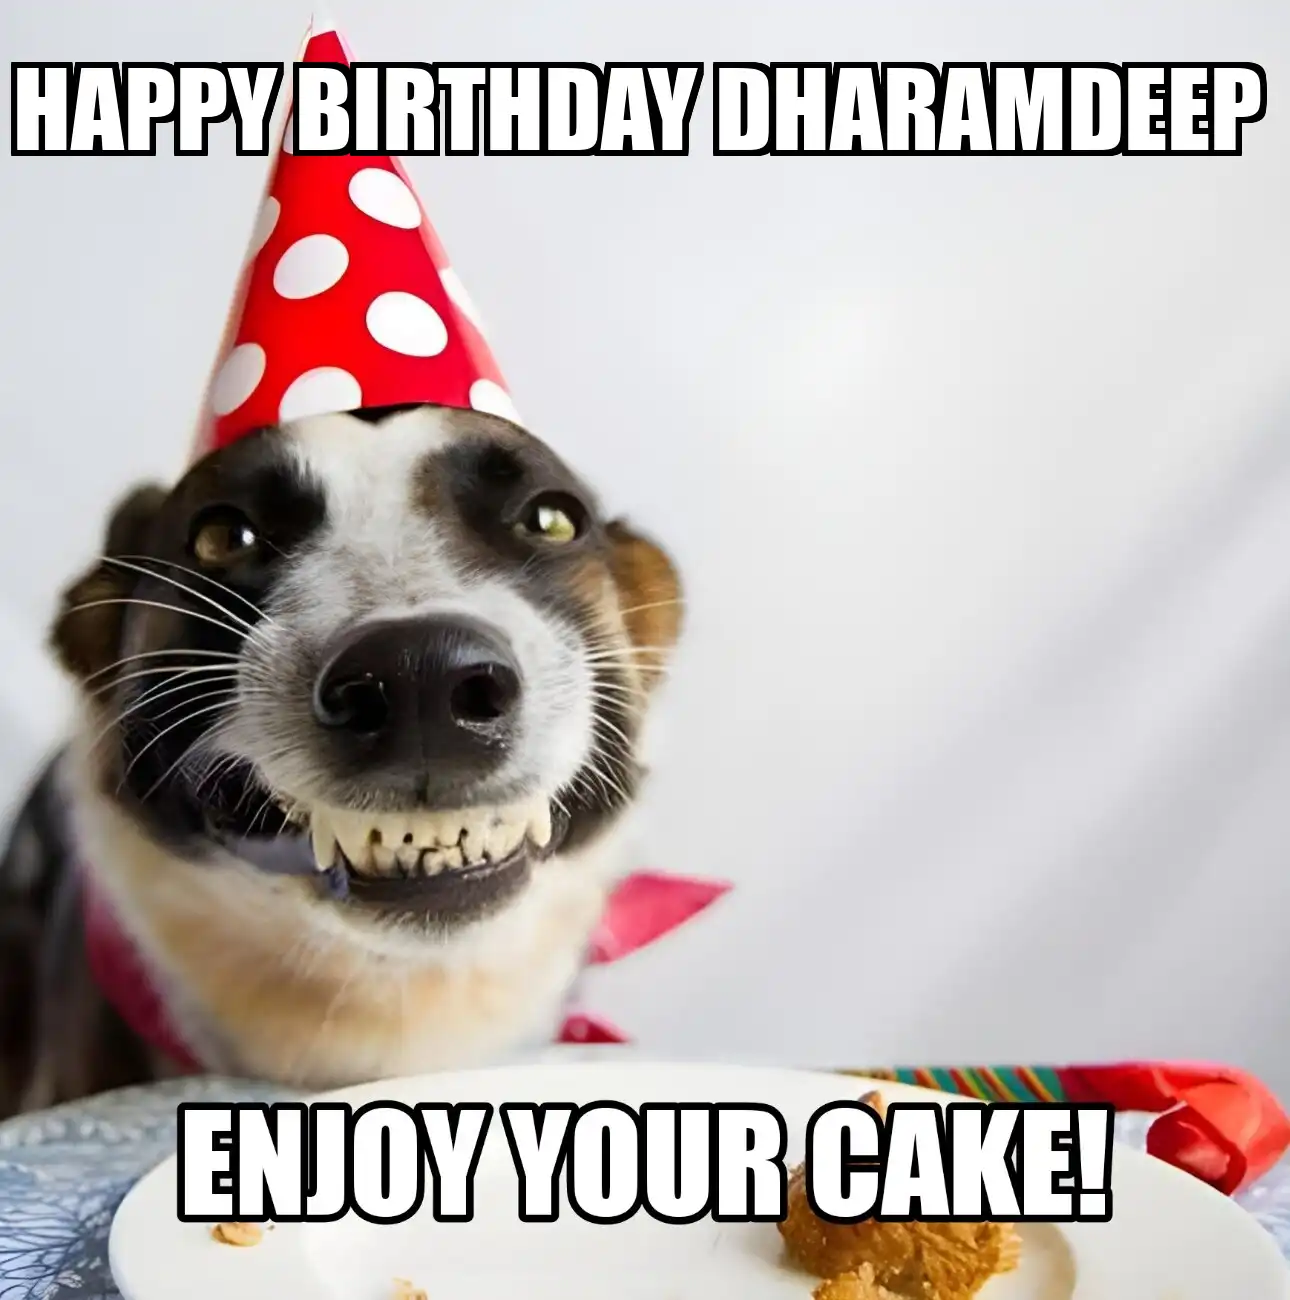 Happy Birthday Dharamdeep Enjoy Your Cake Dog Meme